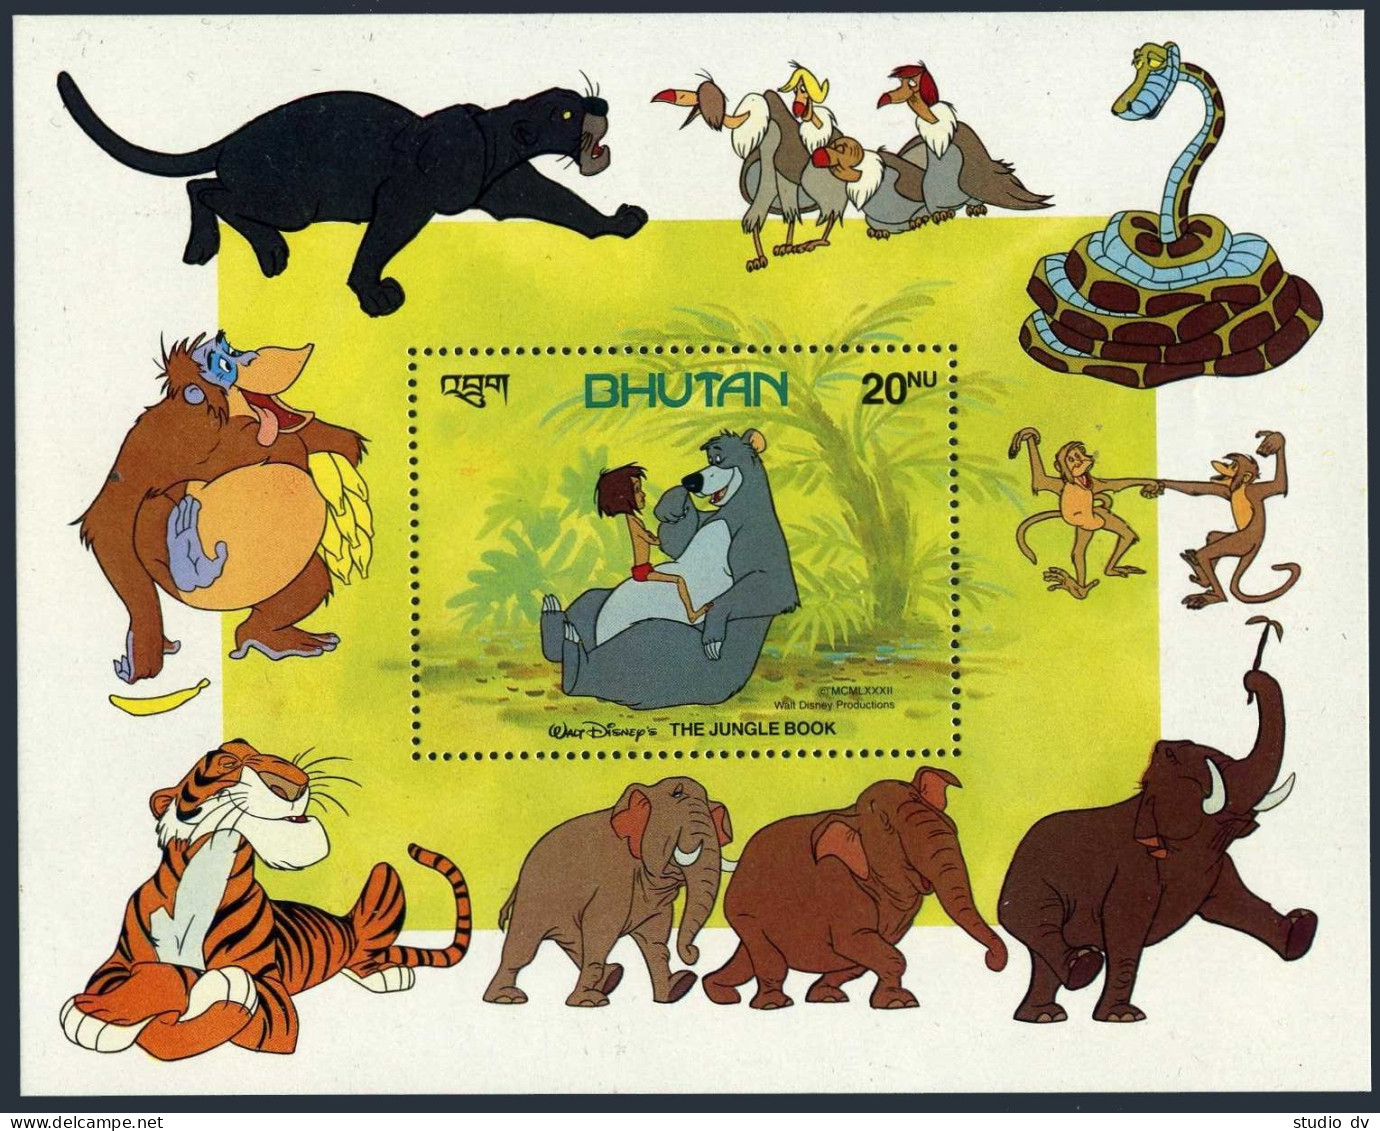 Bhutan 340-348,349,350 Sheets,MNH. Scenes From Disney's The Jungle Book,1982. - Bhután